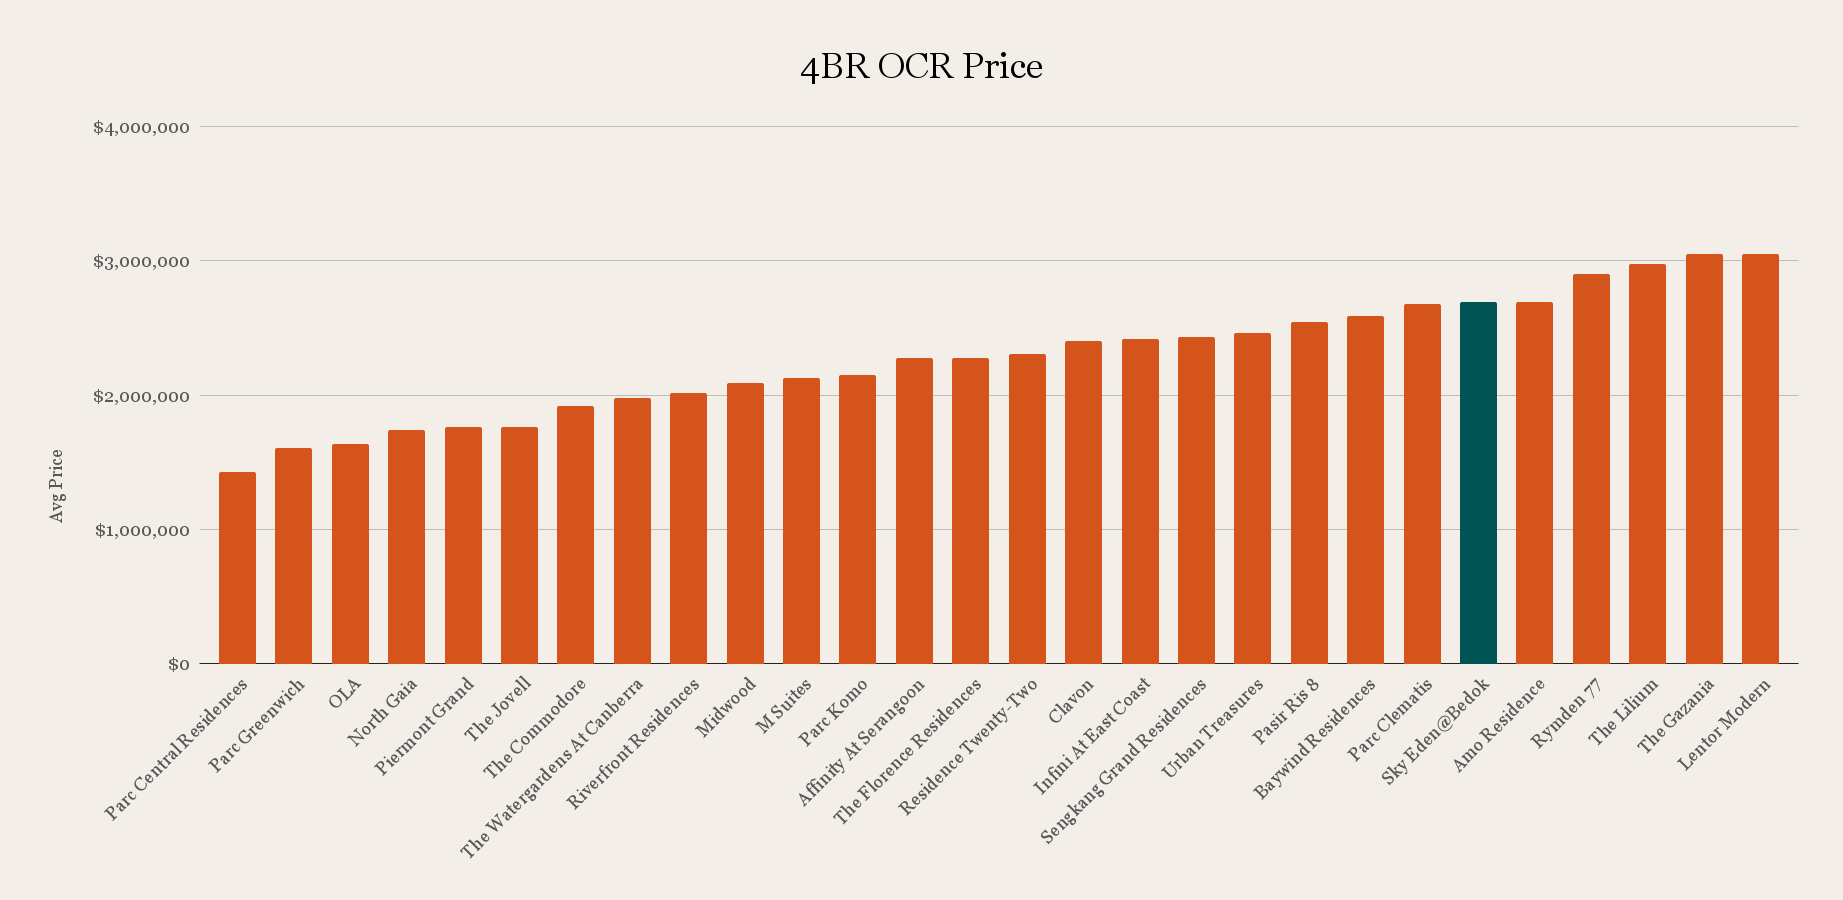 4BR OCR Price 1